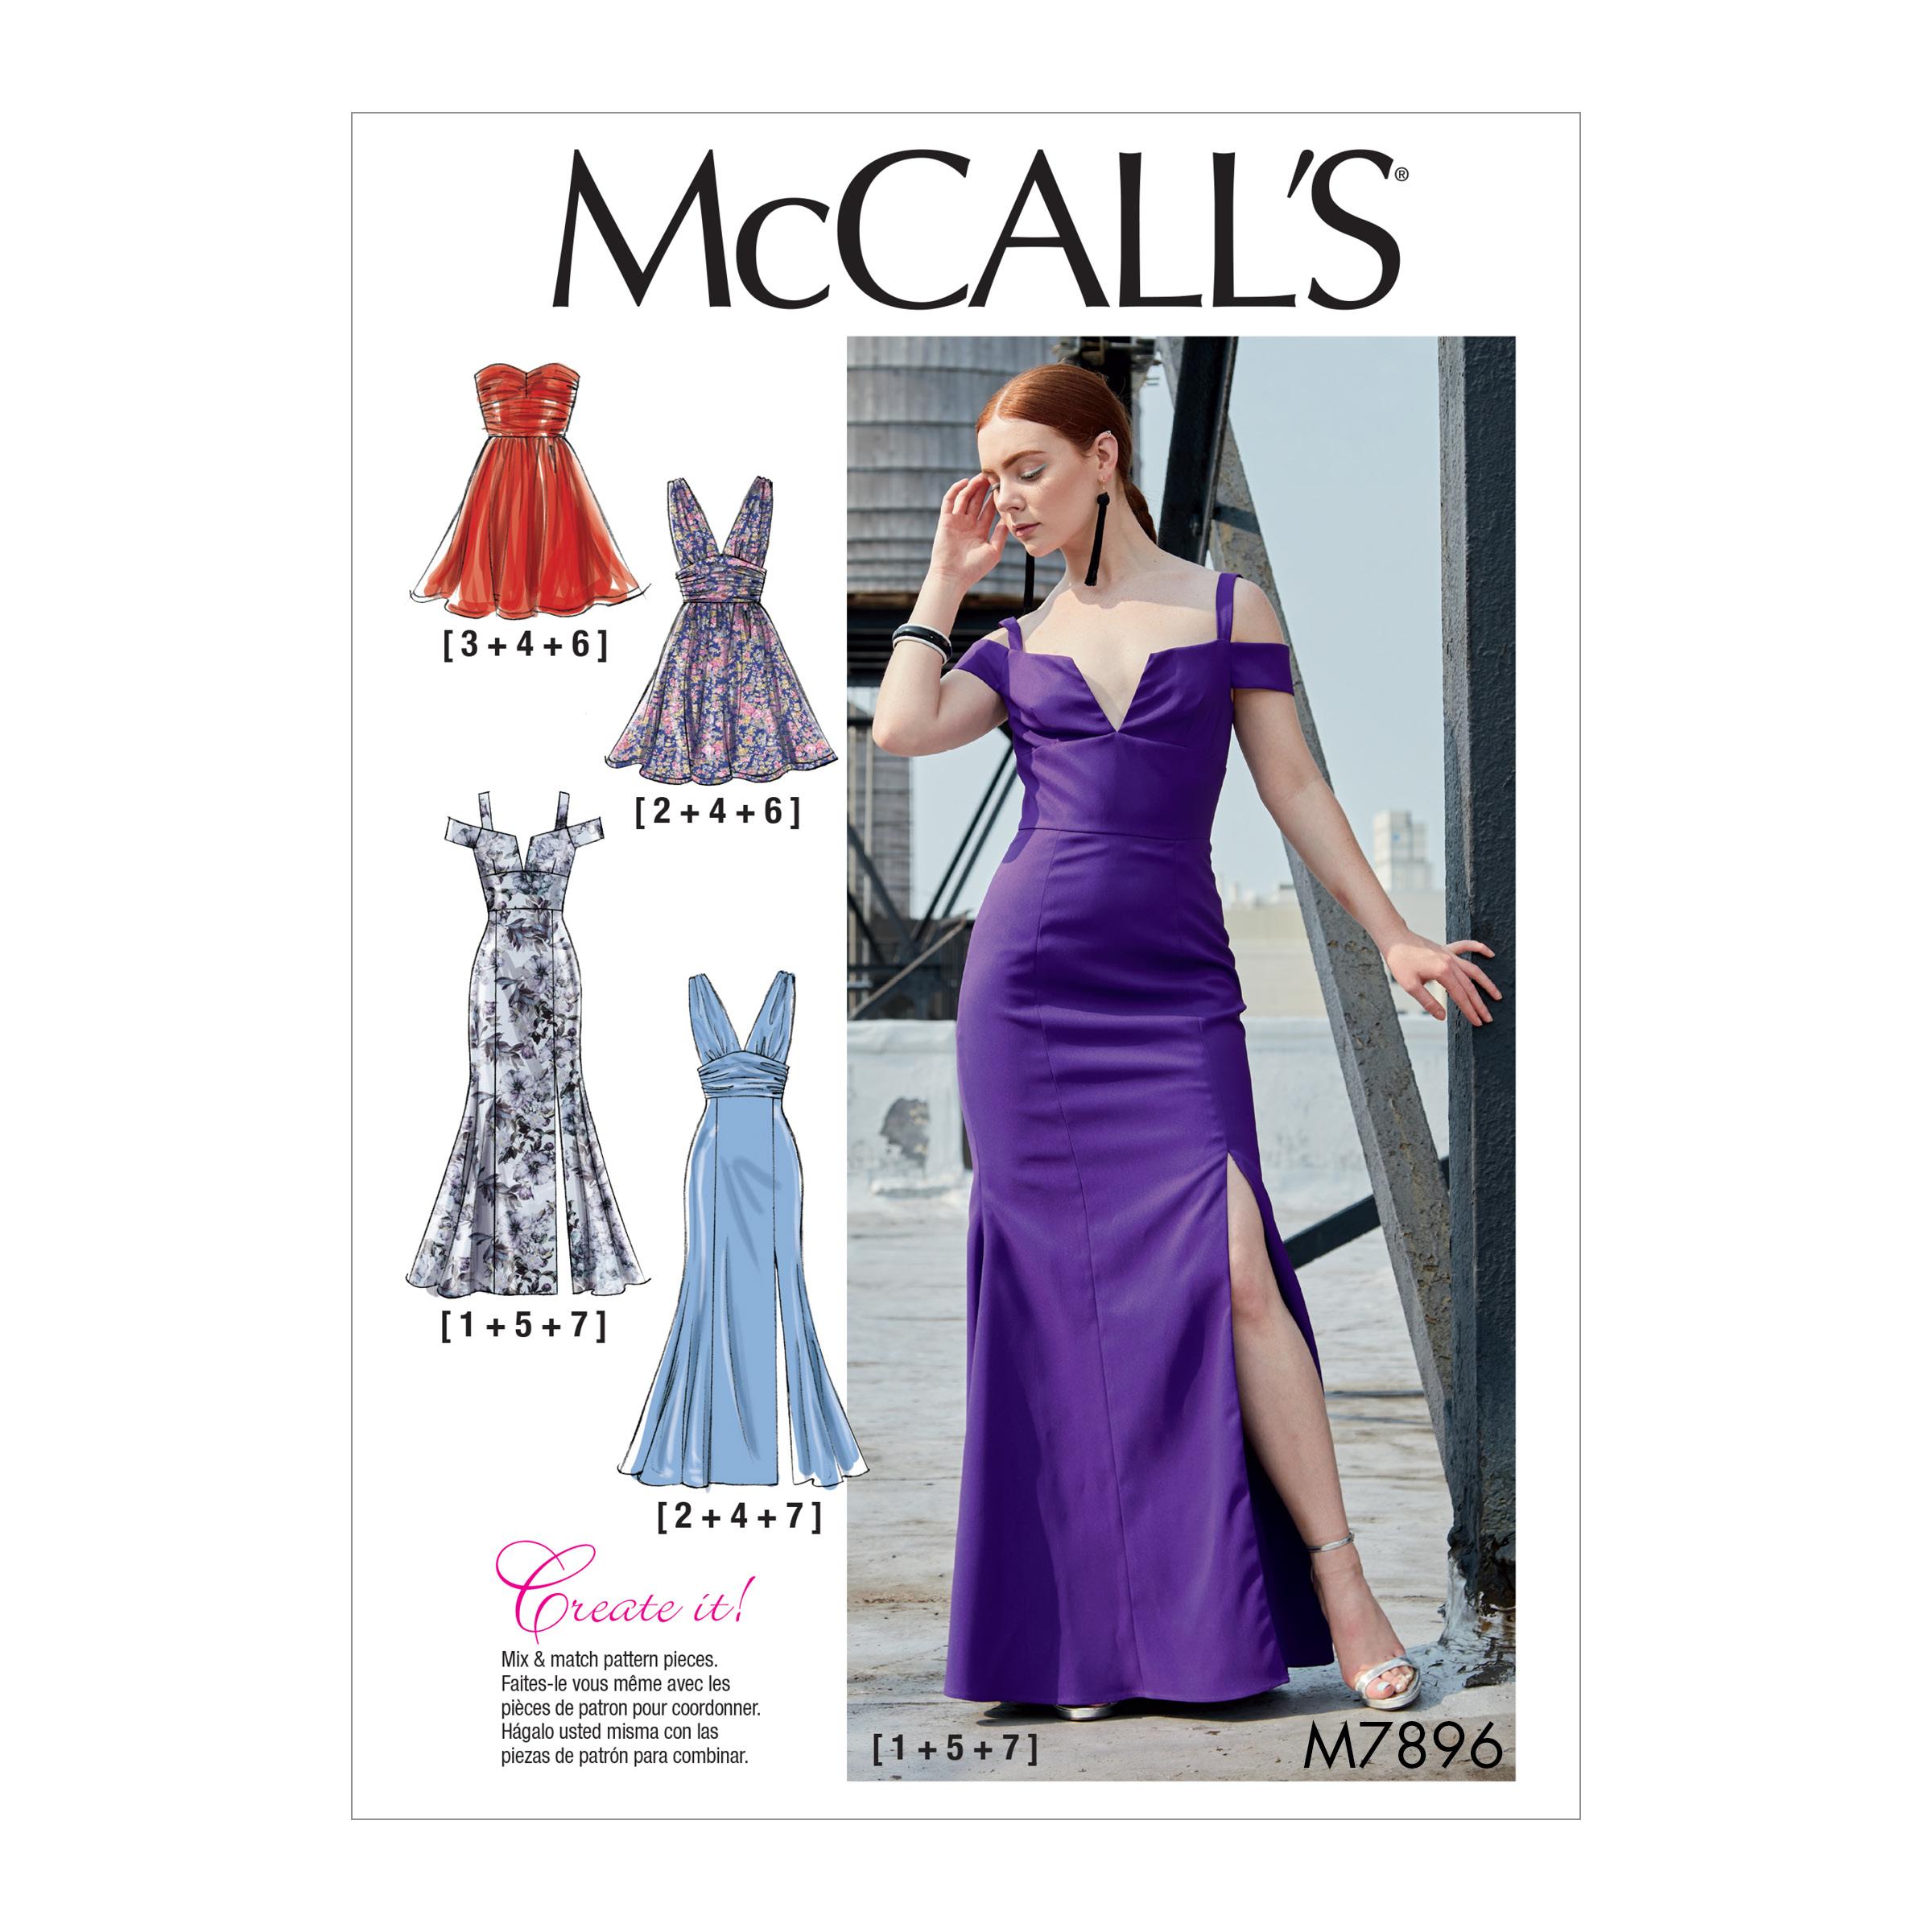 McCalls M7896 Misses Dresses